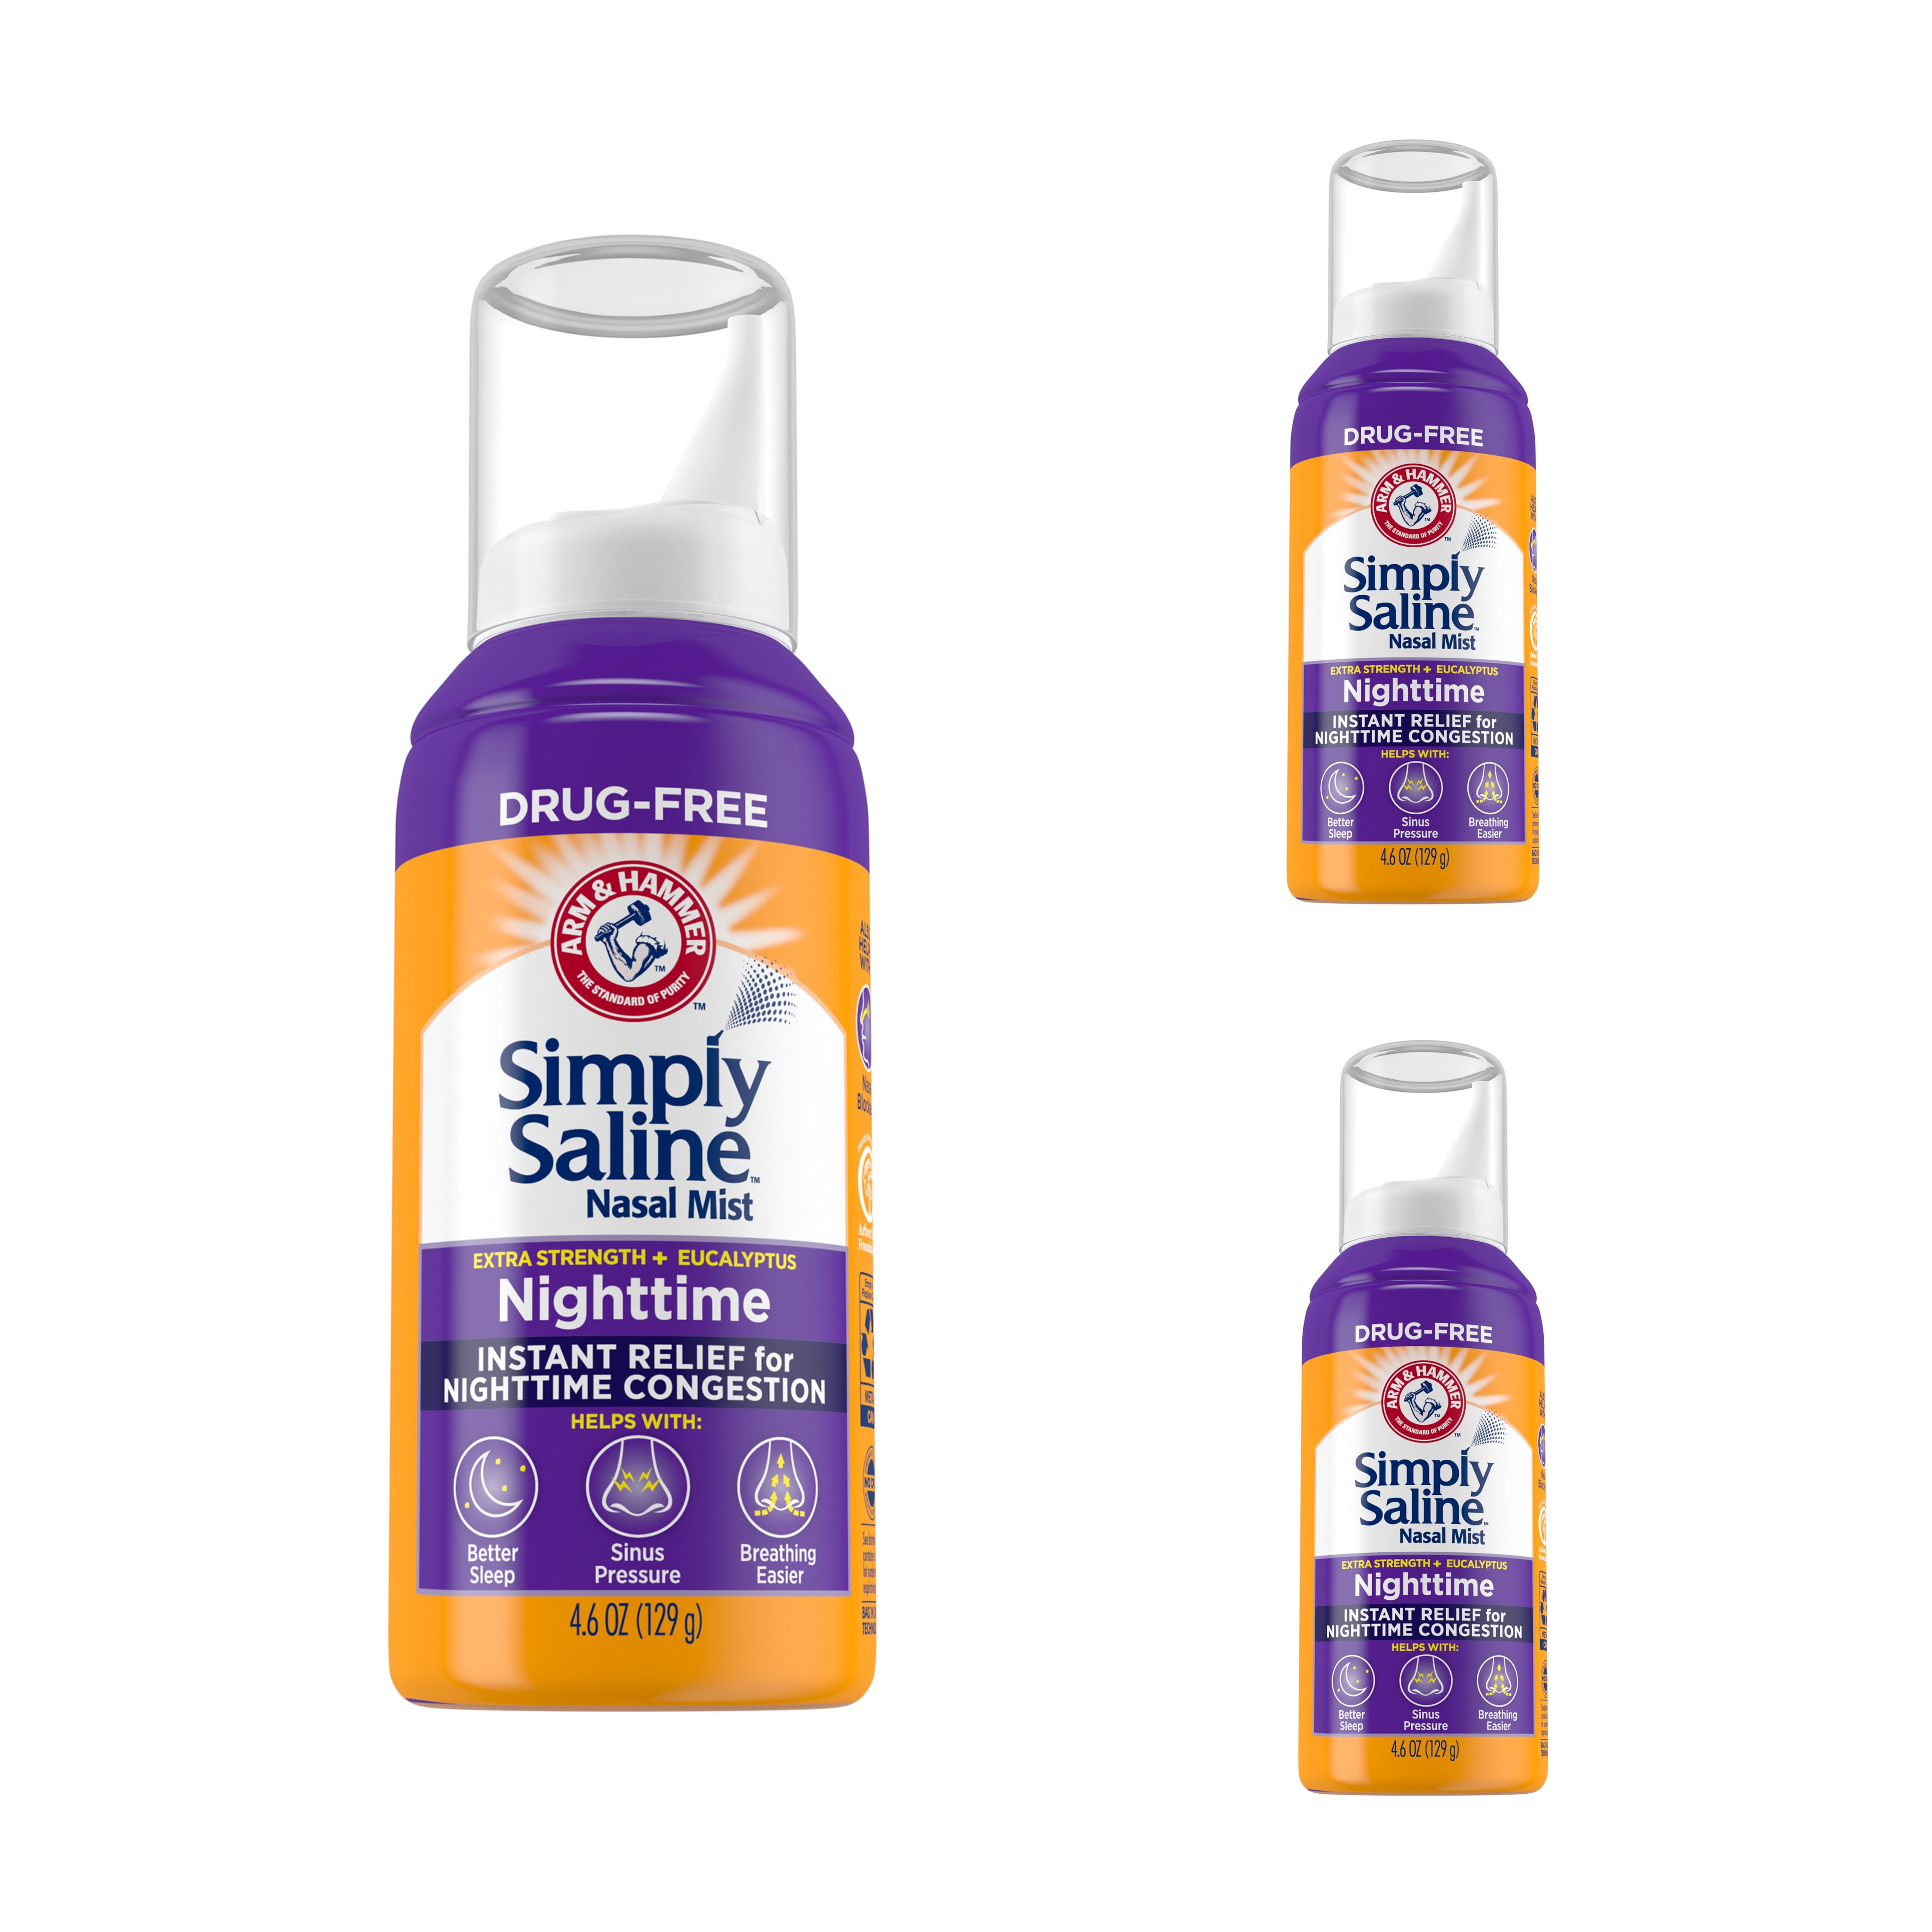 Nose Slap Maximum Strength Smelling Salt with Essential Oils - Pack of 2